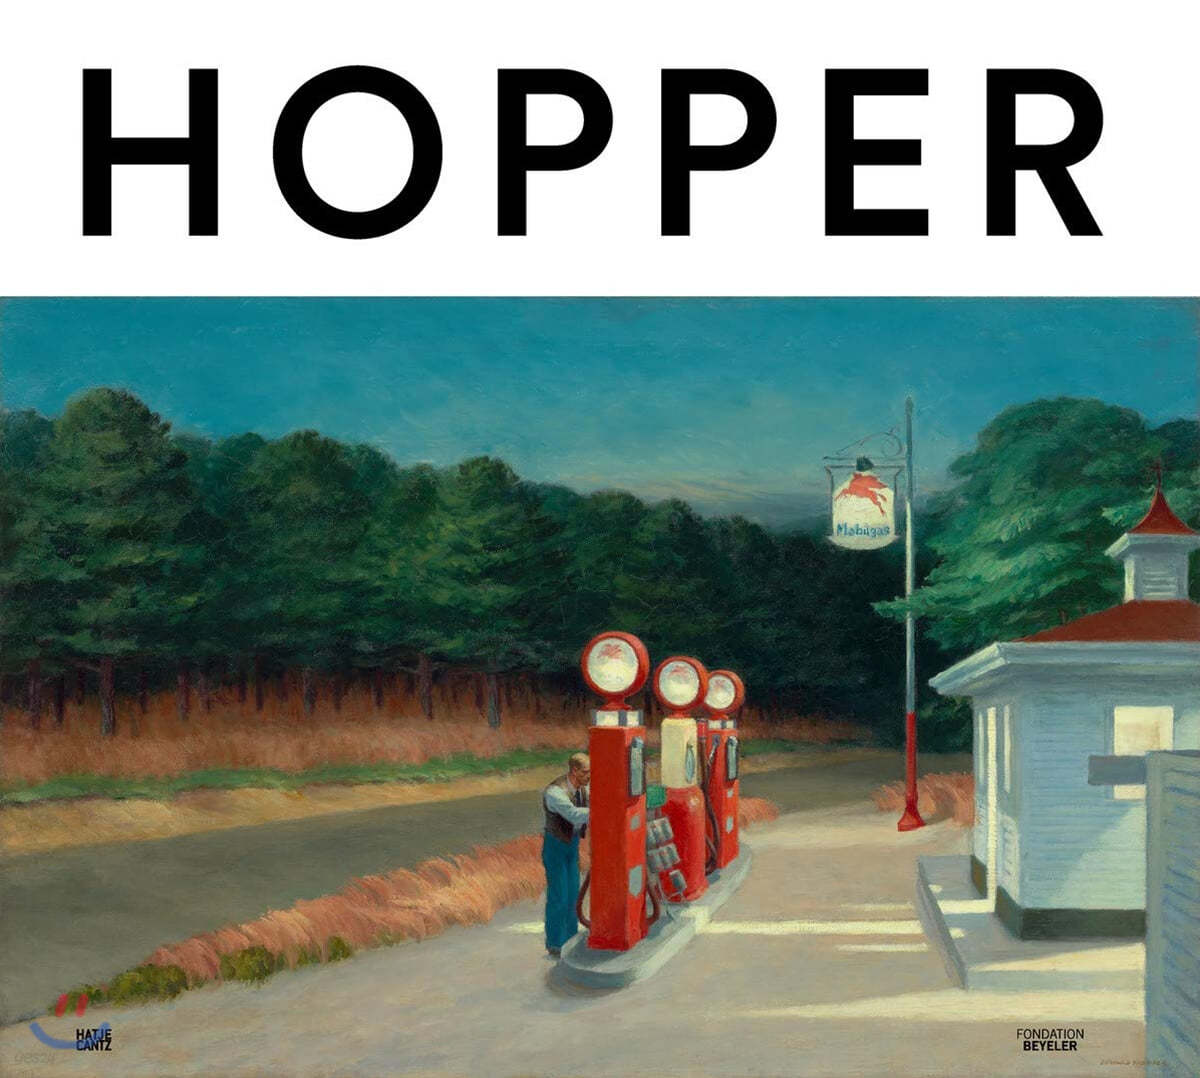 Edward Hopper: A New Perspective on Landscape